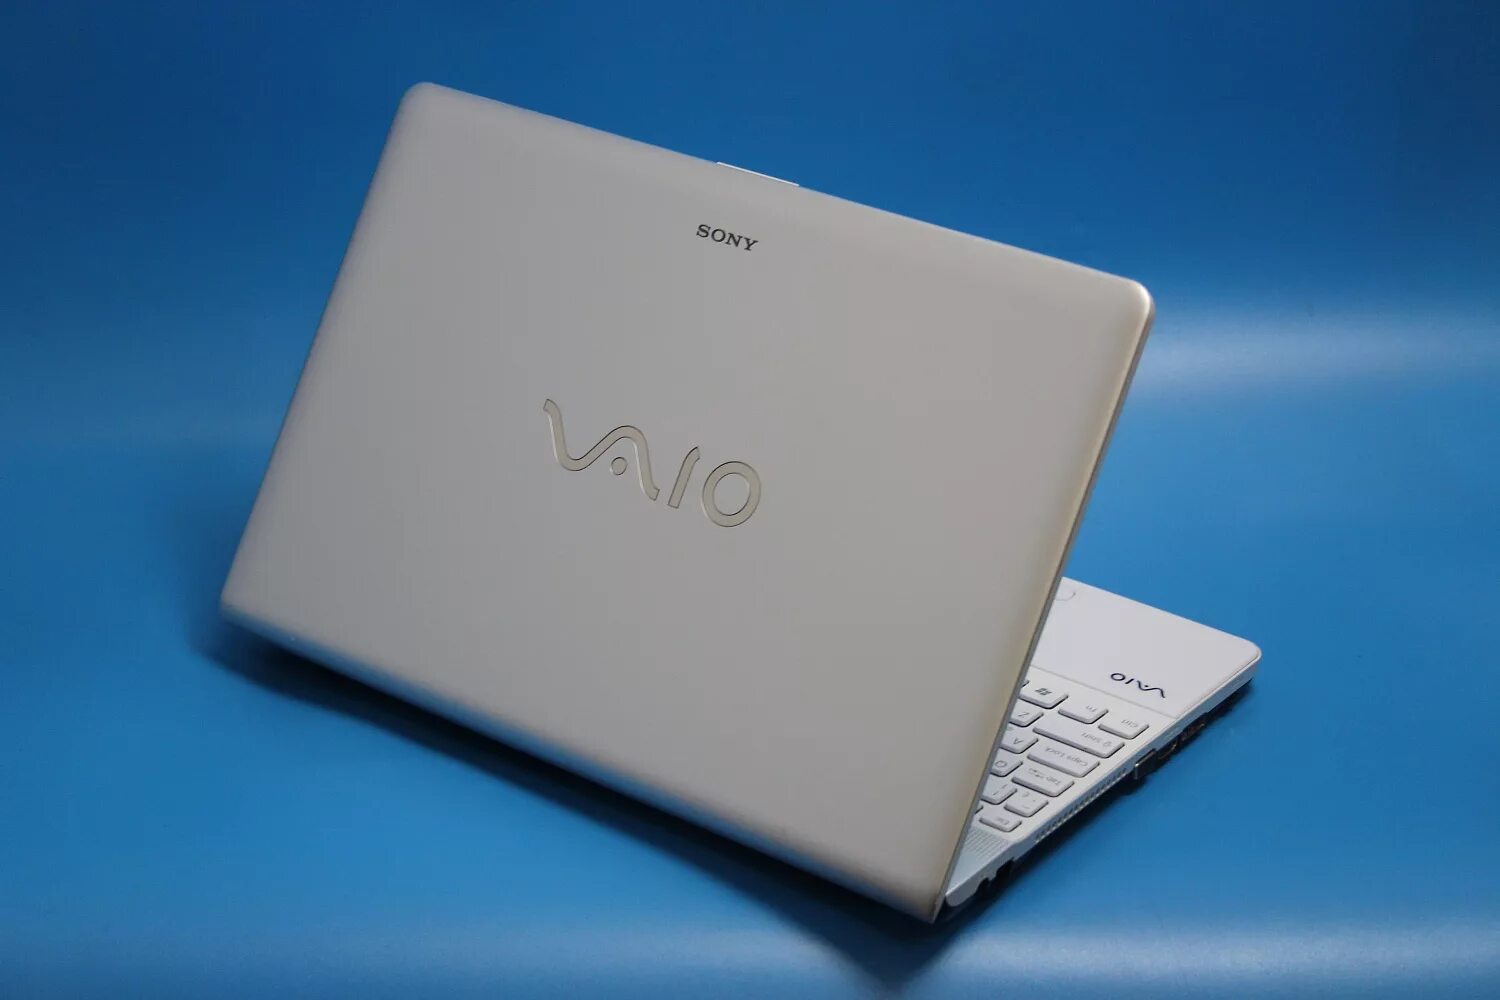 Сони вайо купить. Ноутбук Sony VAIO 2012 года. Ноутбук сони Sony VAIO. Ноутбук сони VAIO 2022. Ноутбук сони Вайо белый.